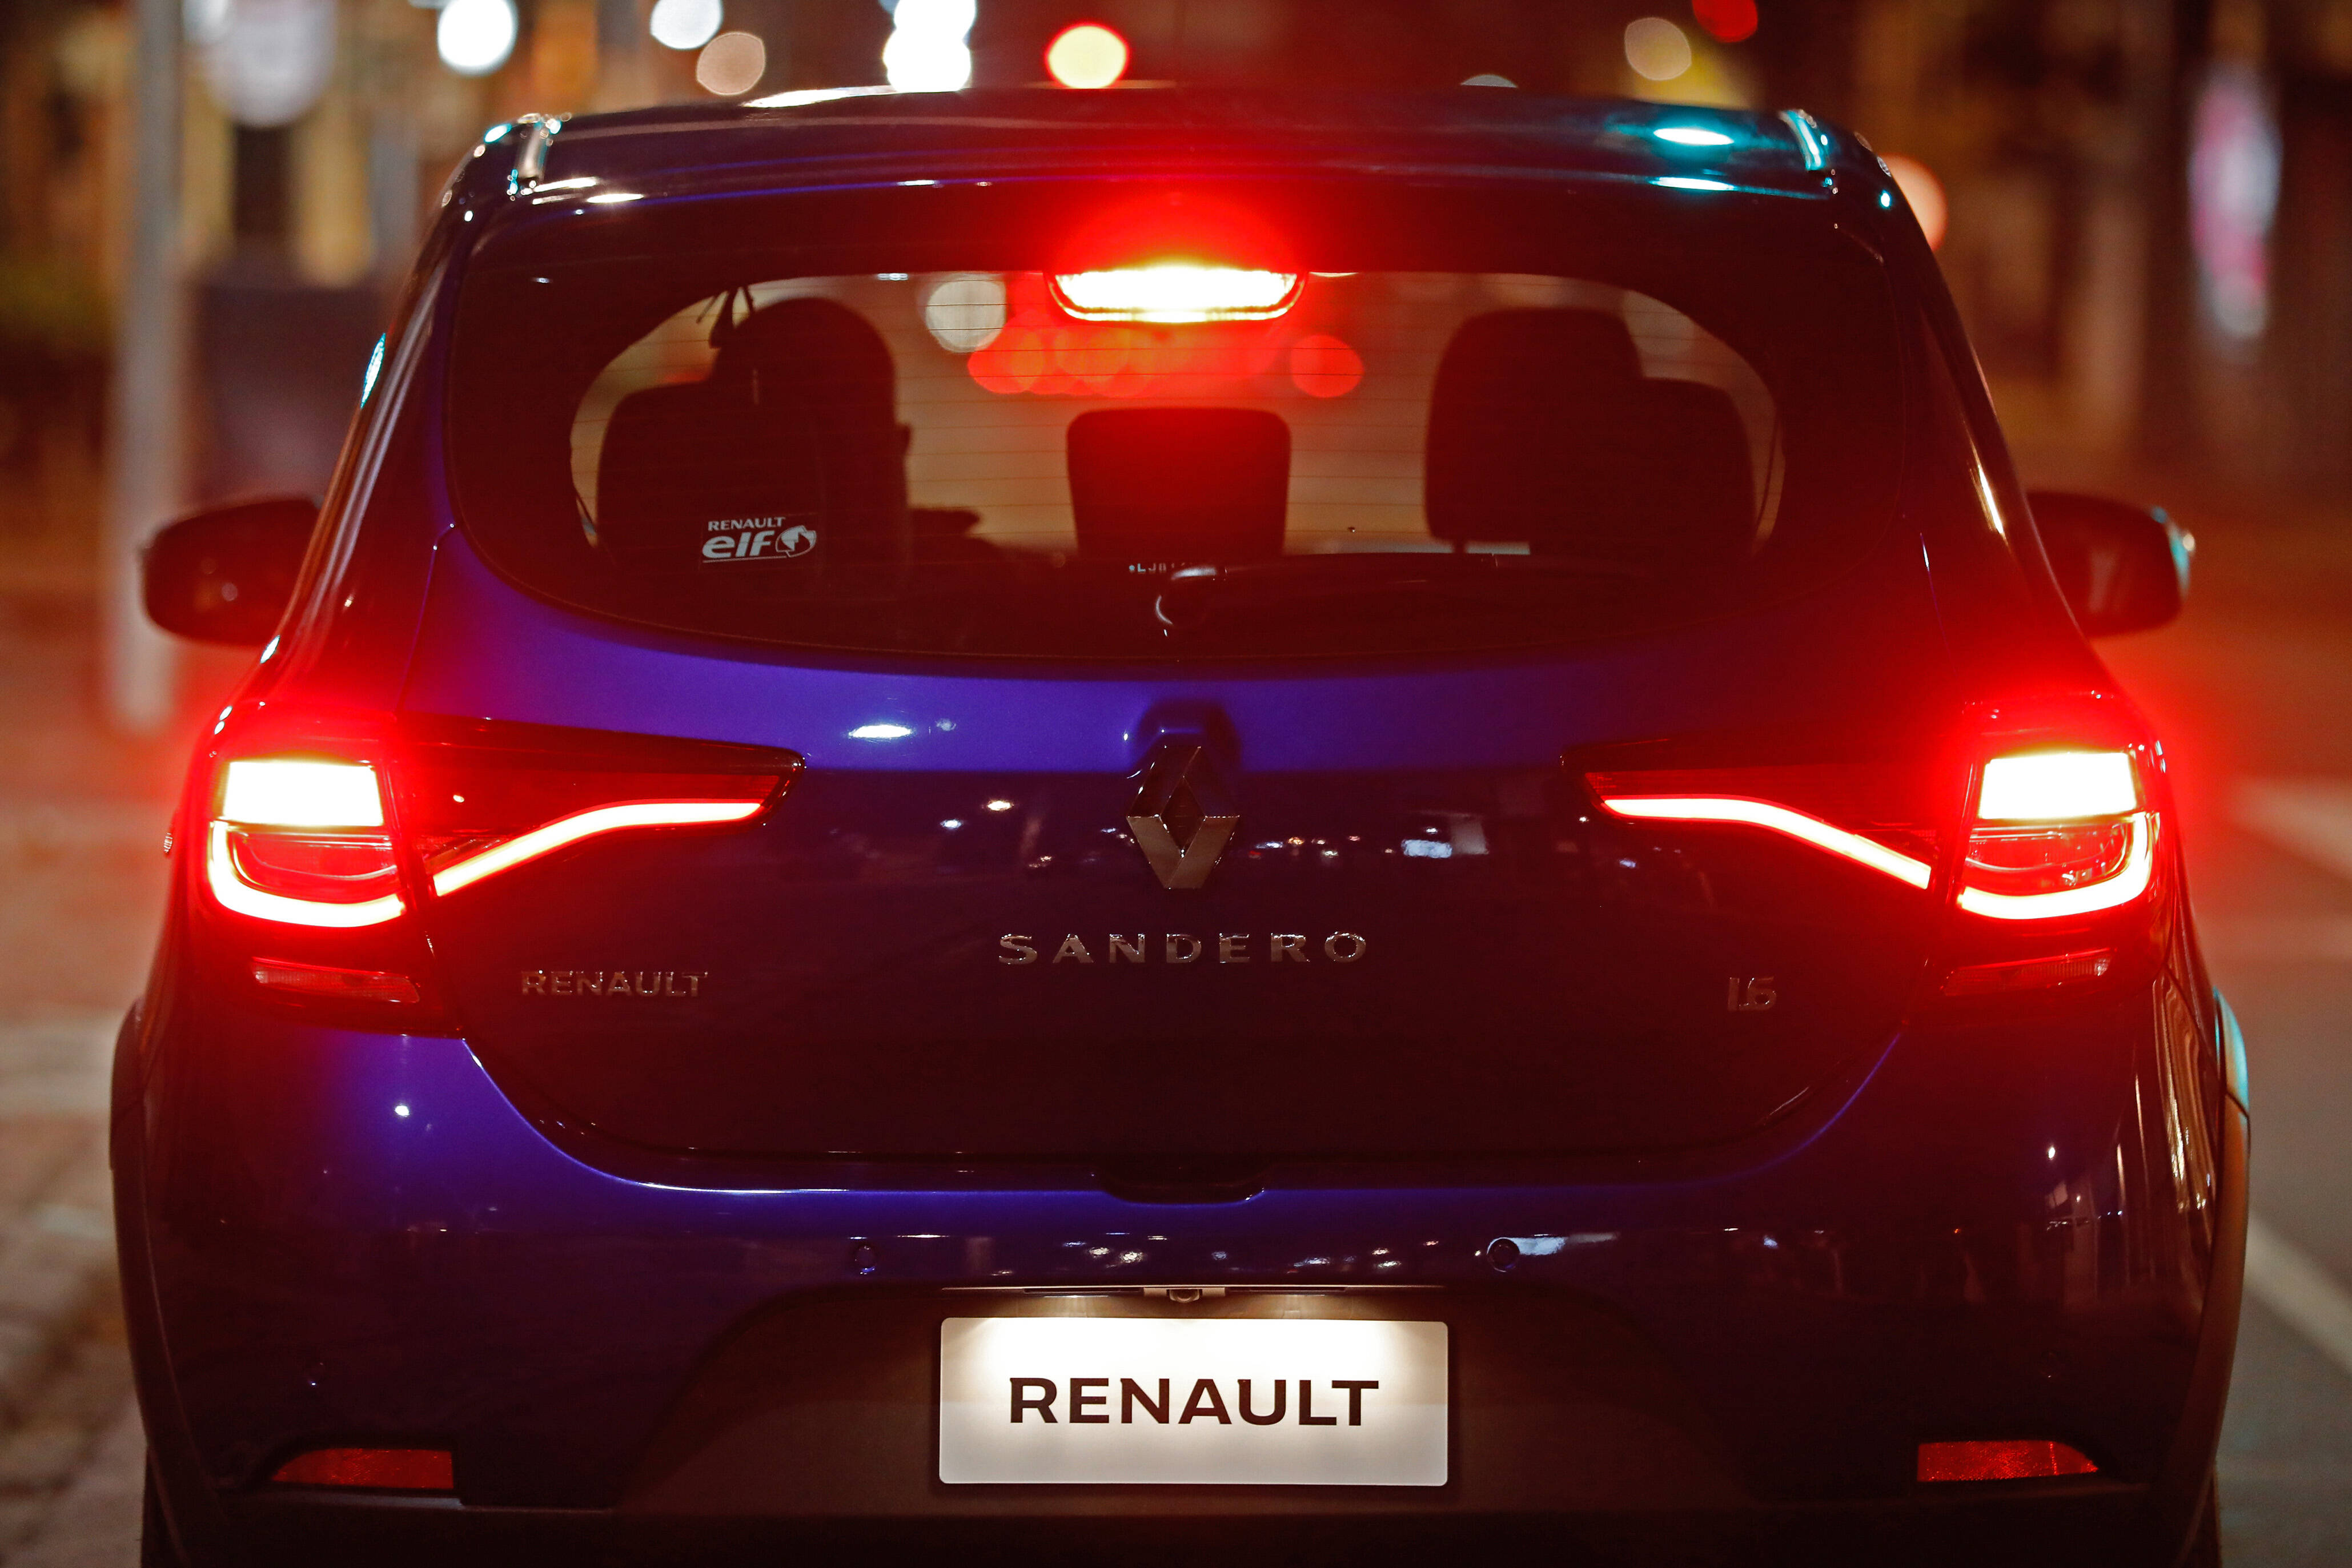 Renault Sandero. Foto: Divulgação